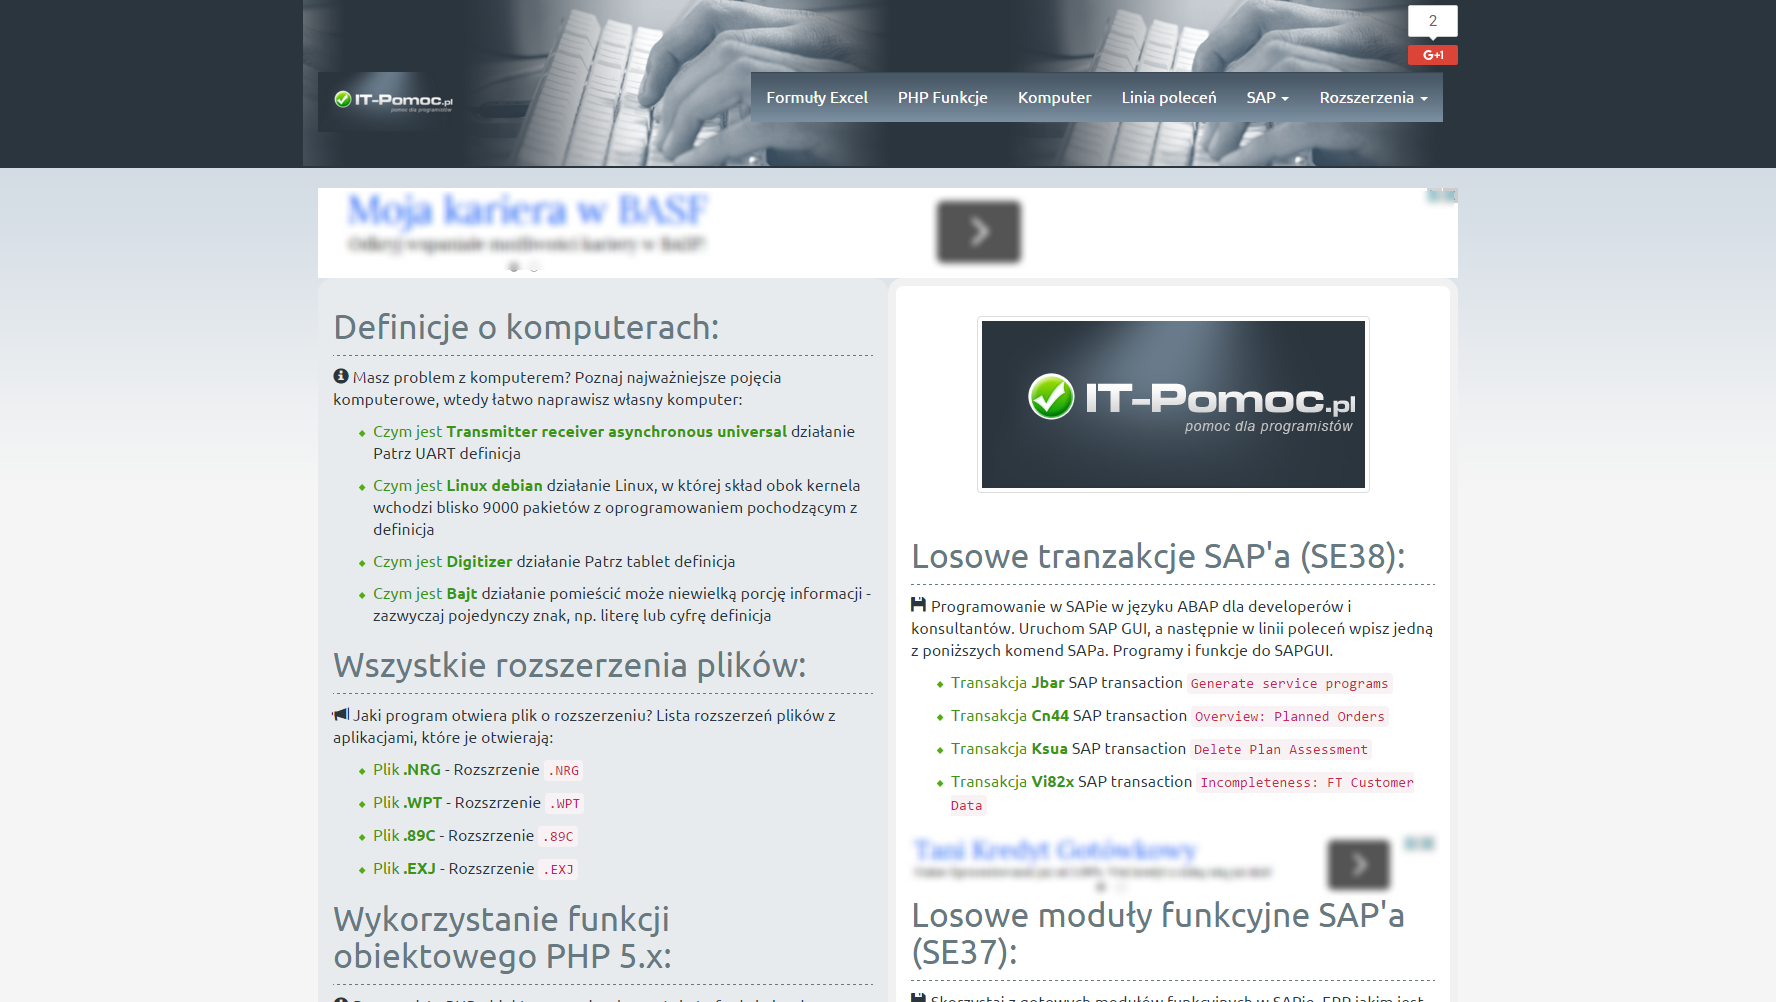 Proyecto IT-Pomoc.pl